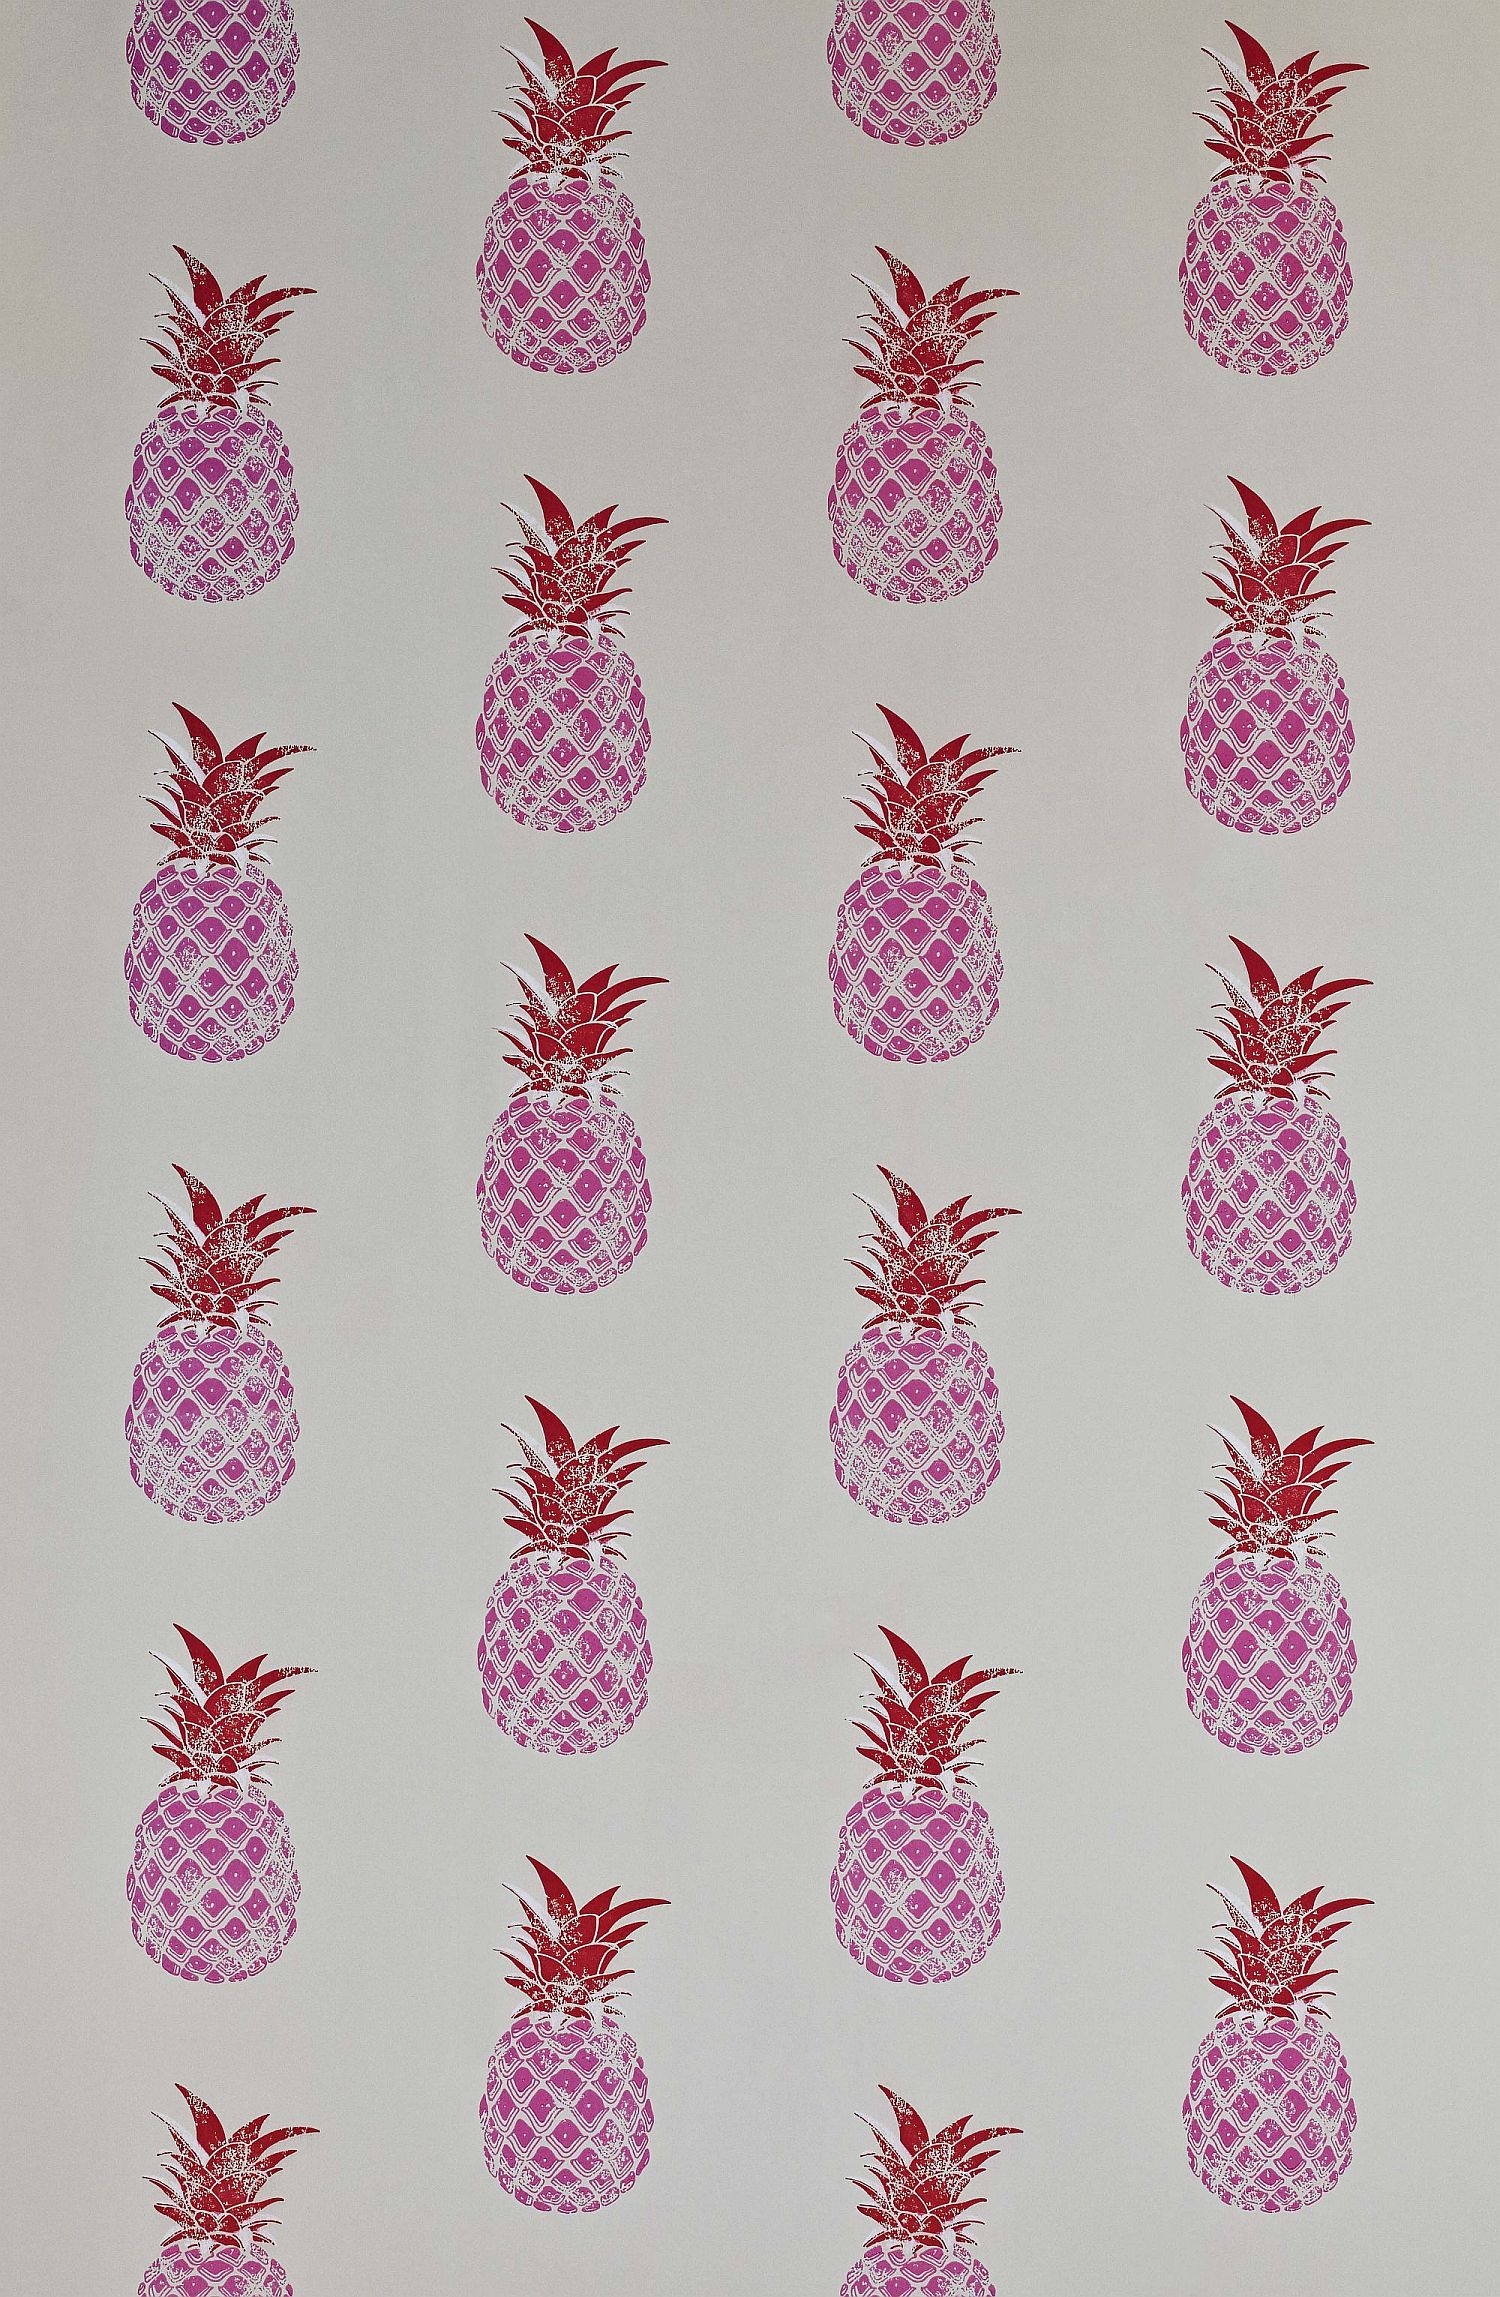 Cute Girly Pink Pineapple Wallpaper Whatsapp